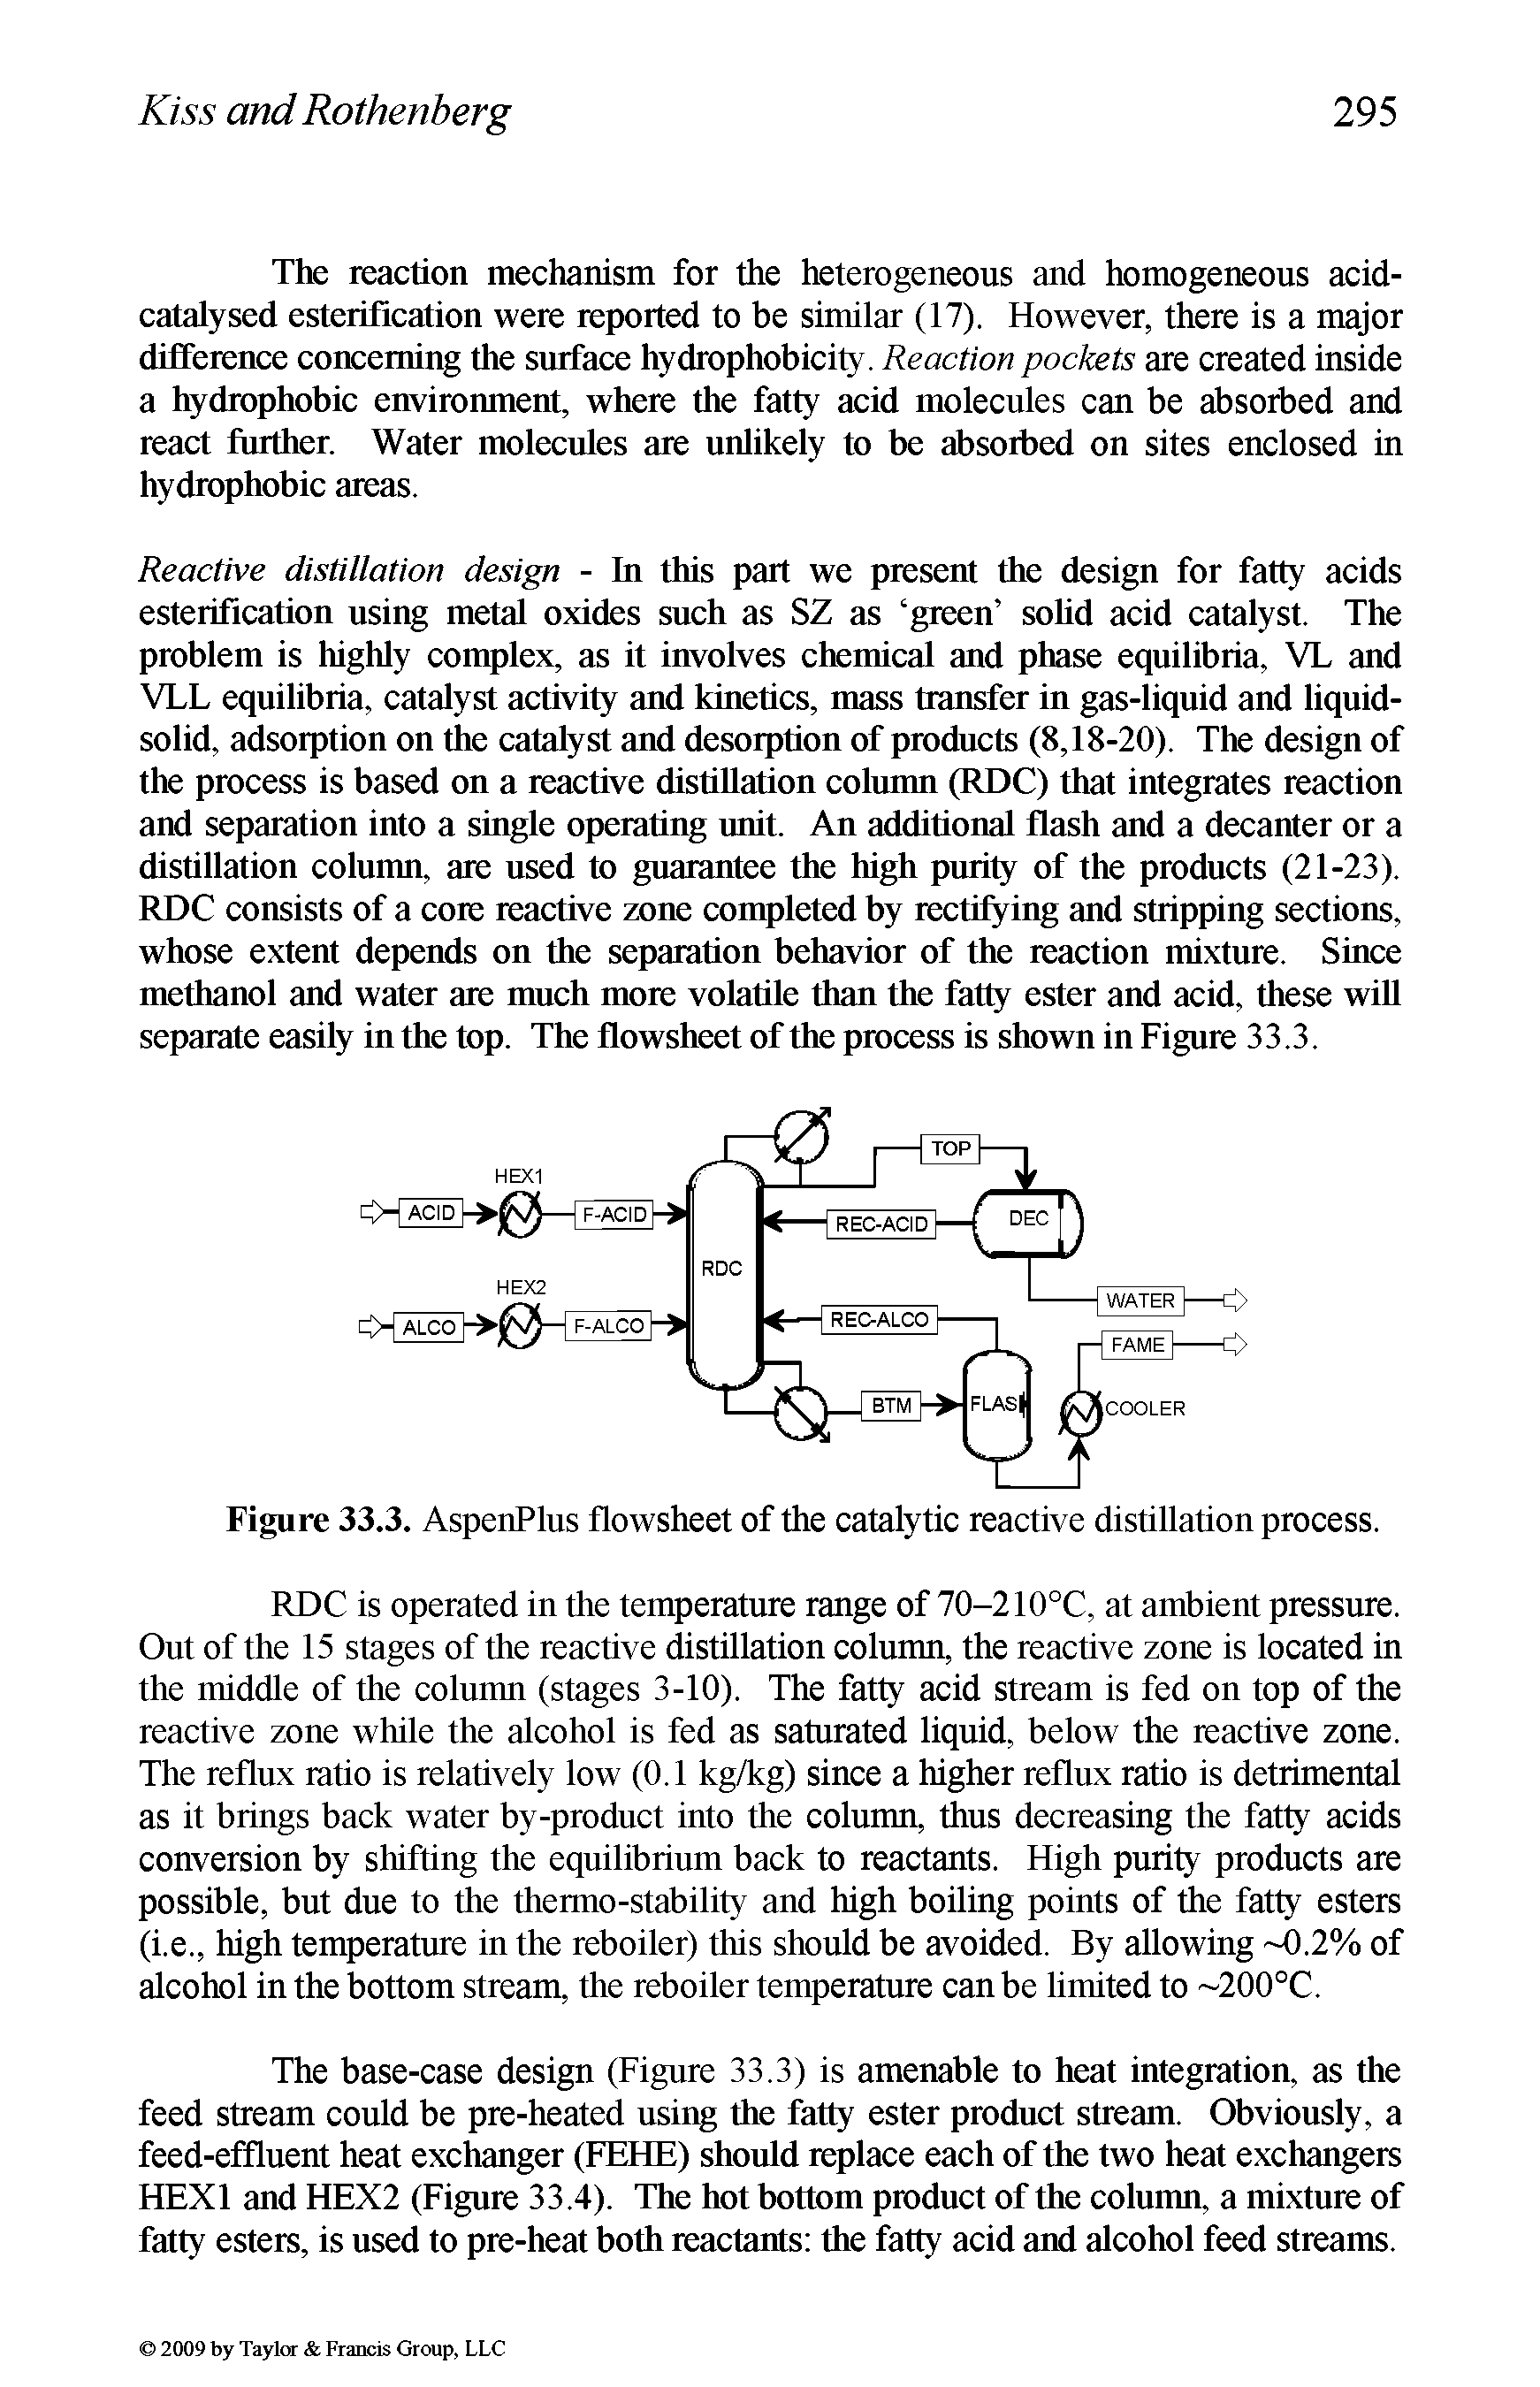 Figure 33.3. AspenPlus flowsheet of the catalytic reactive distillation process.